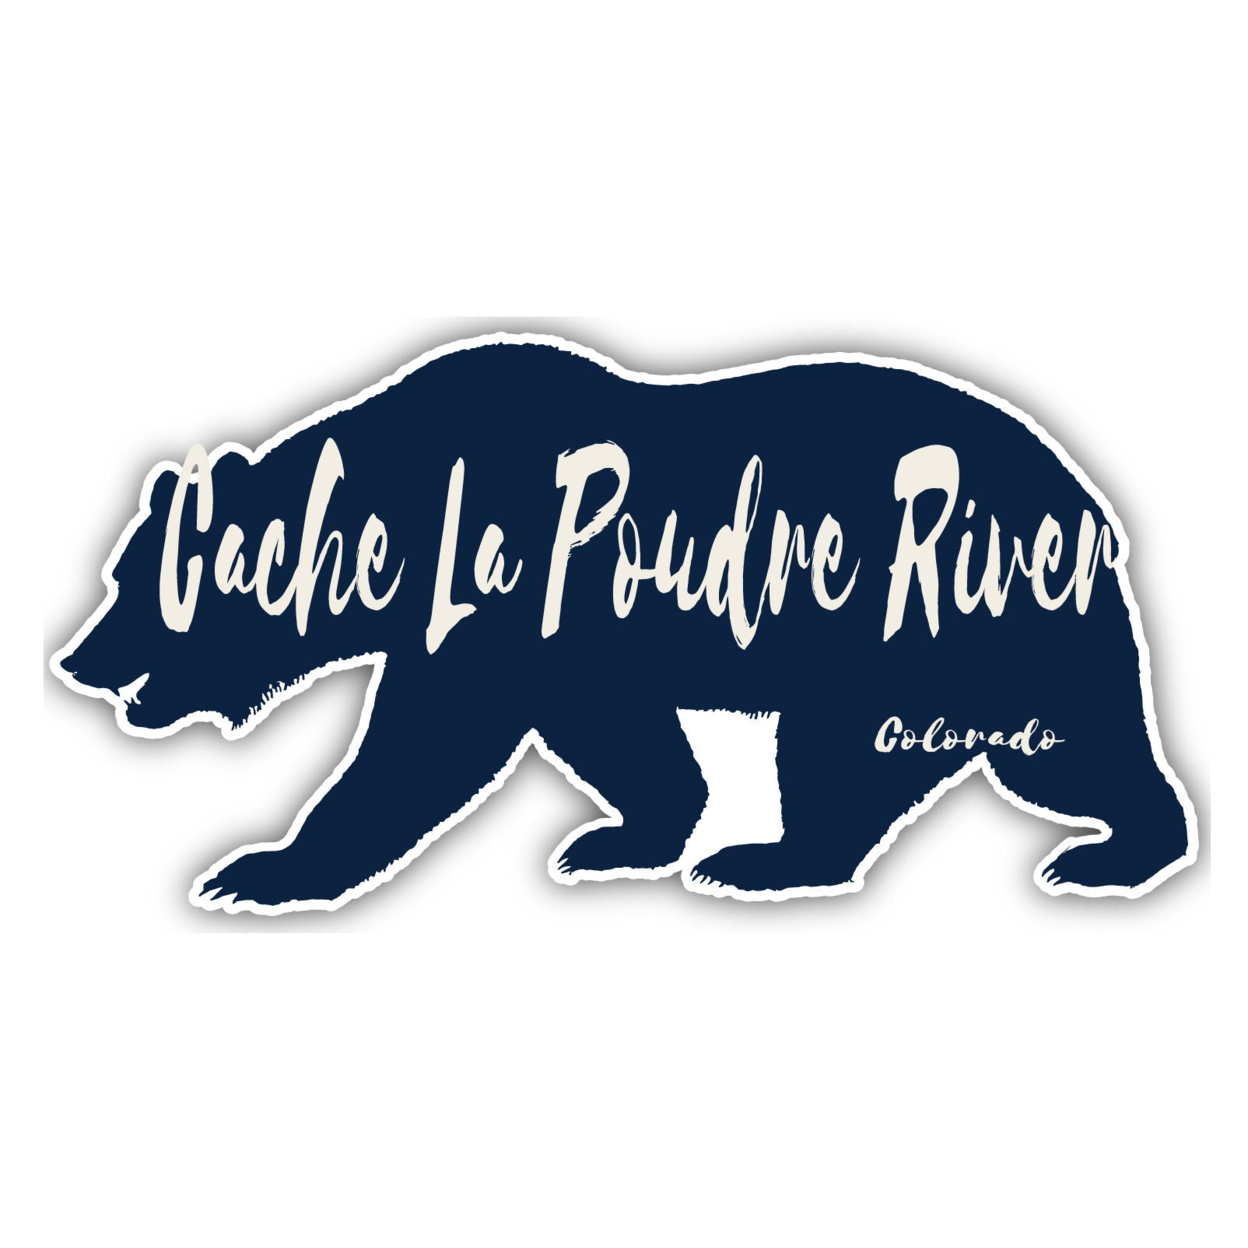 Cache La Poudre River Colorado Souvenir Decorative Stickers (Choose Theme And Size) - 4-Pack, 6-Inch, Camp Life